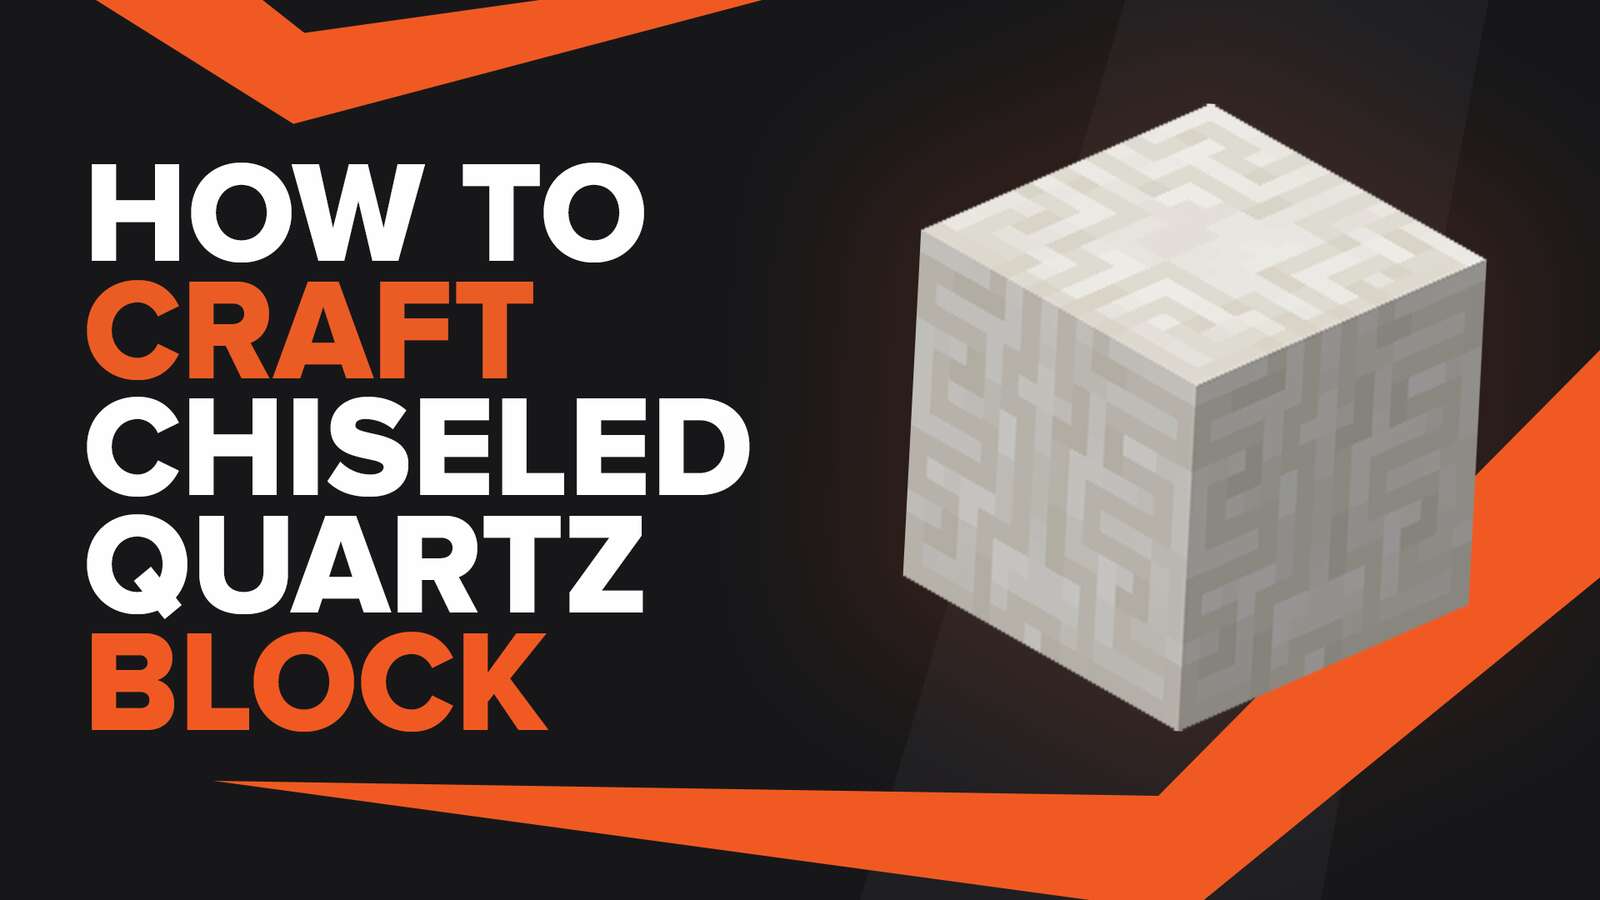 How To Make Chiseled Quartz Block In Minecraft